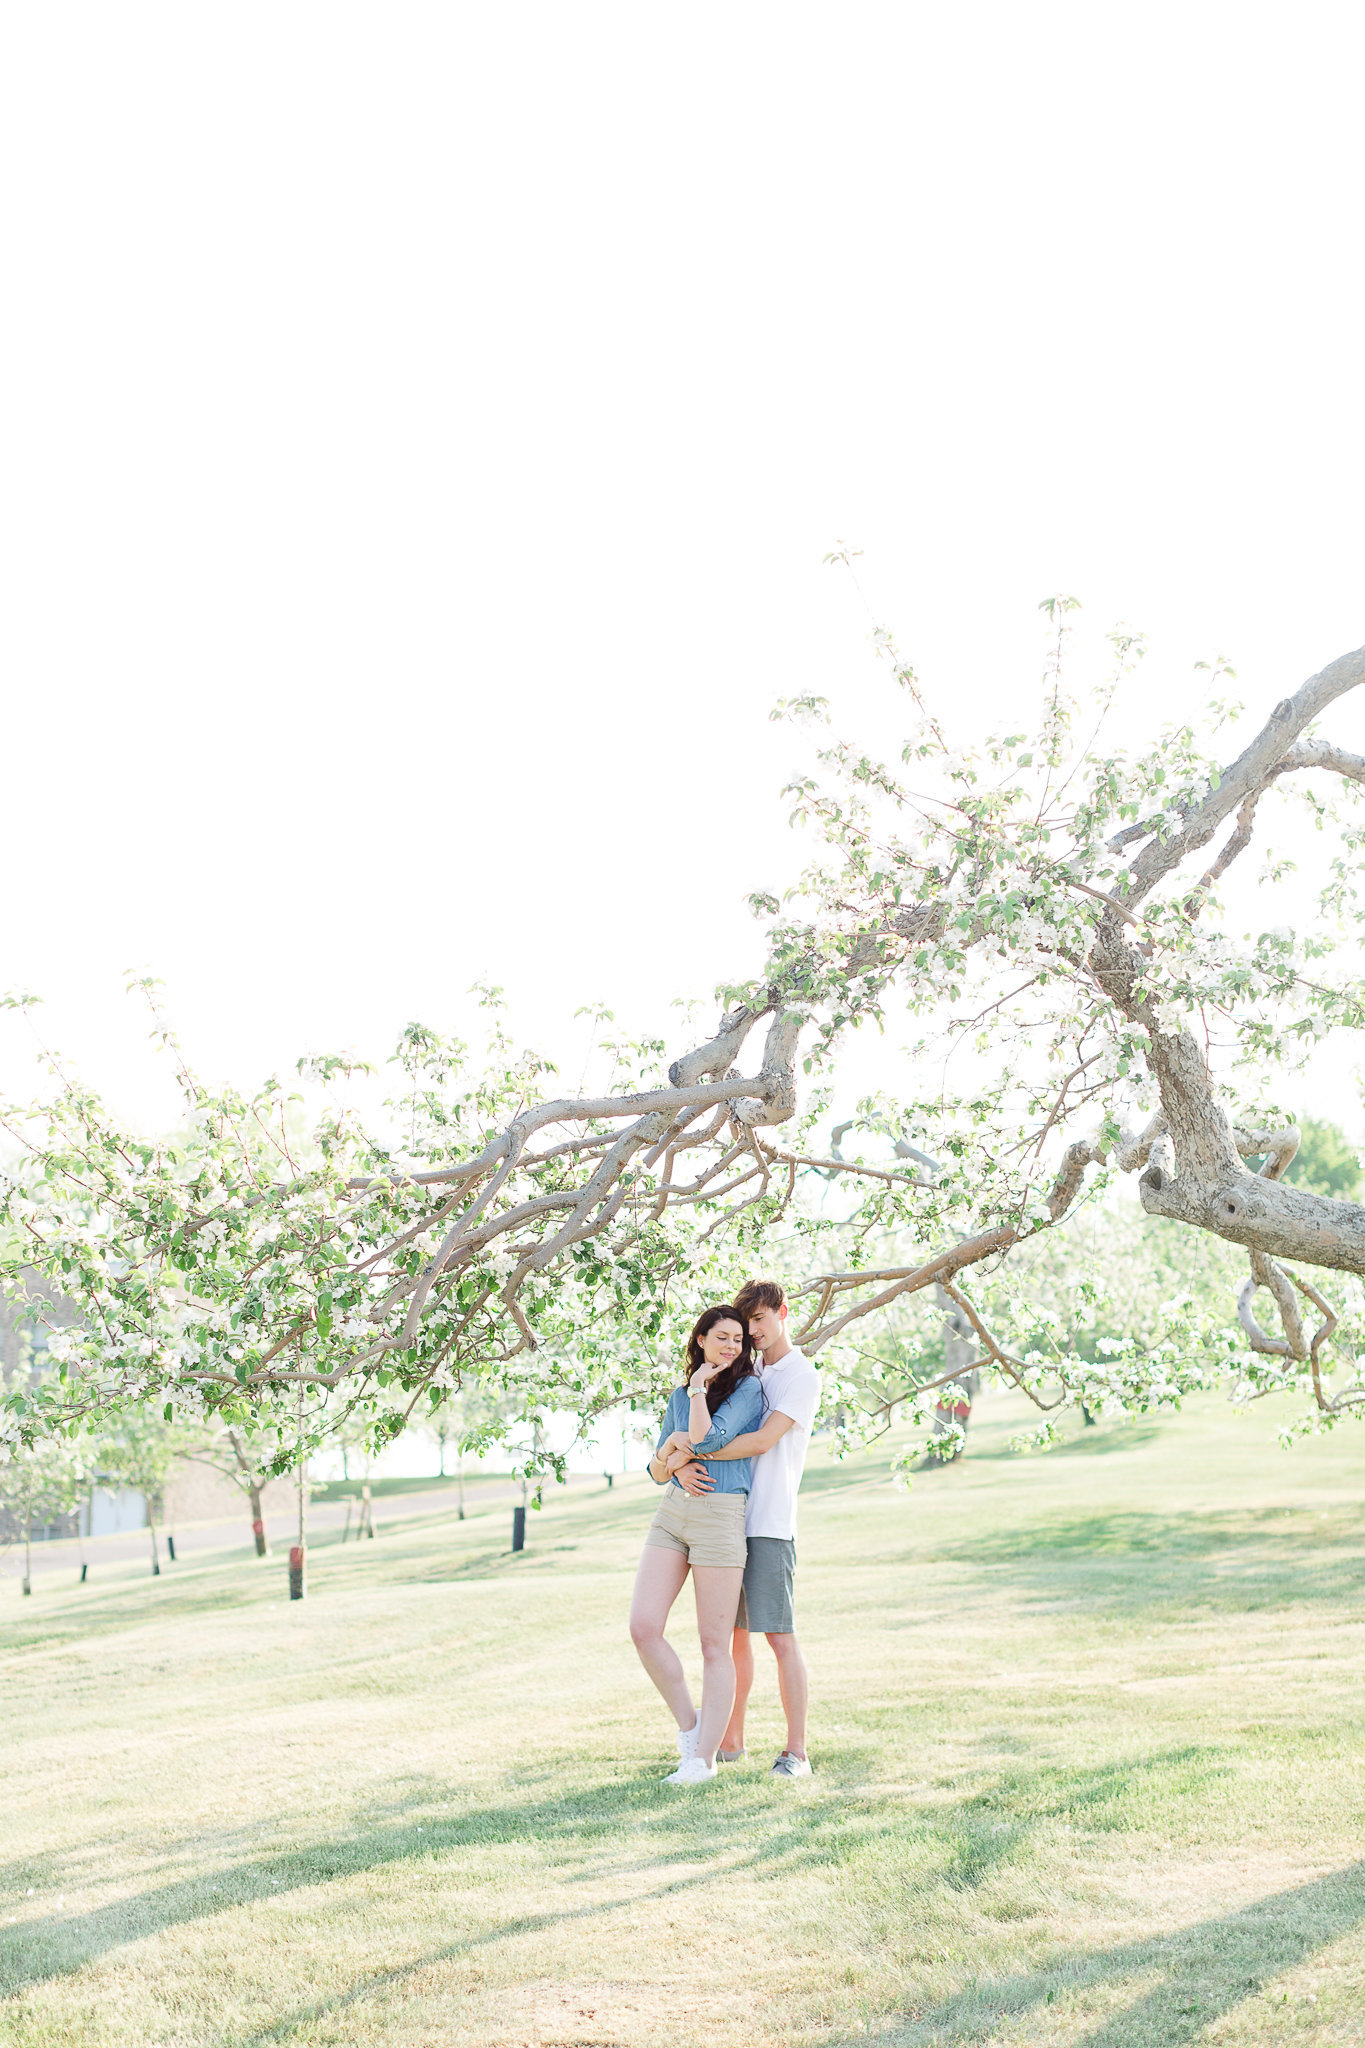 photographe-montreal-demande-en-mariage-lisa-renault-photographie-orchard-wedding-proposal-photographer-9